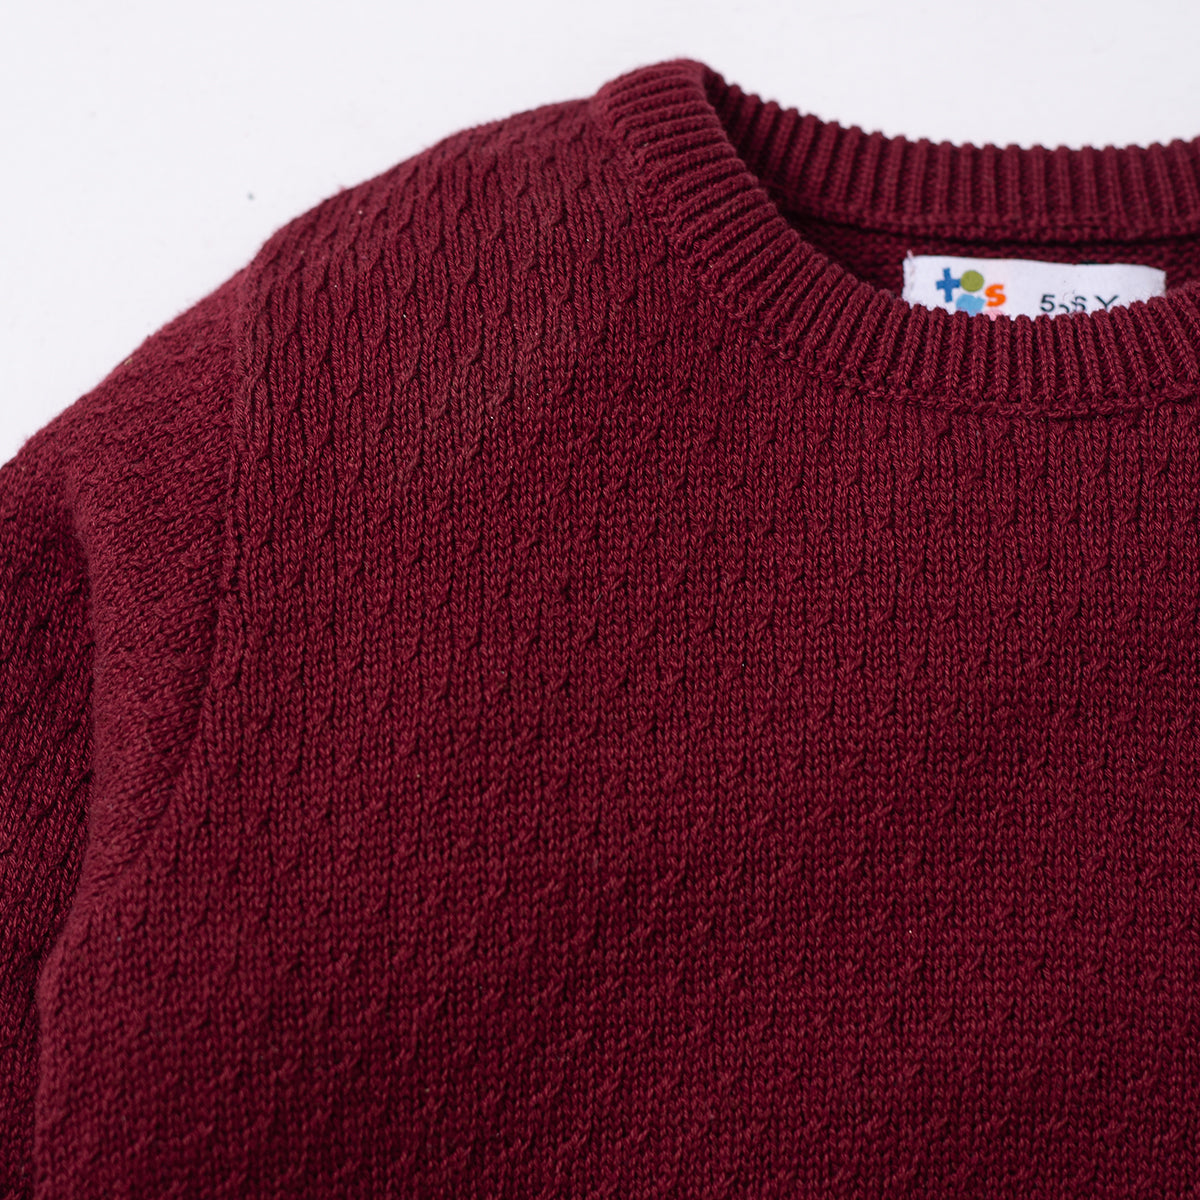 Wool Threading Maroon Sweater